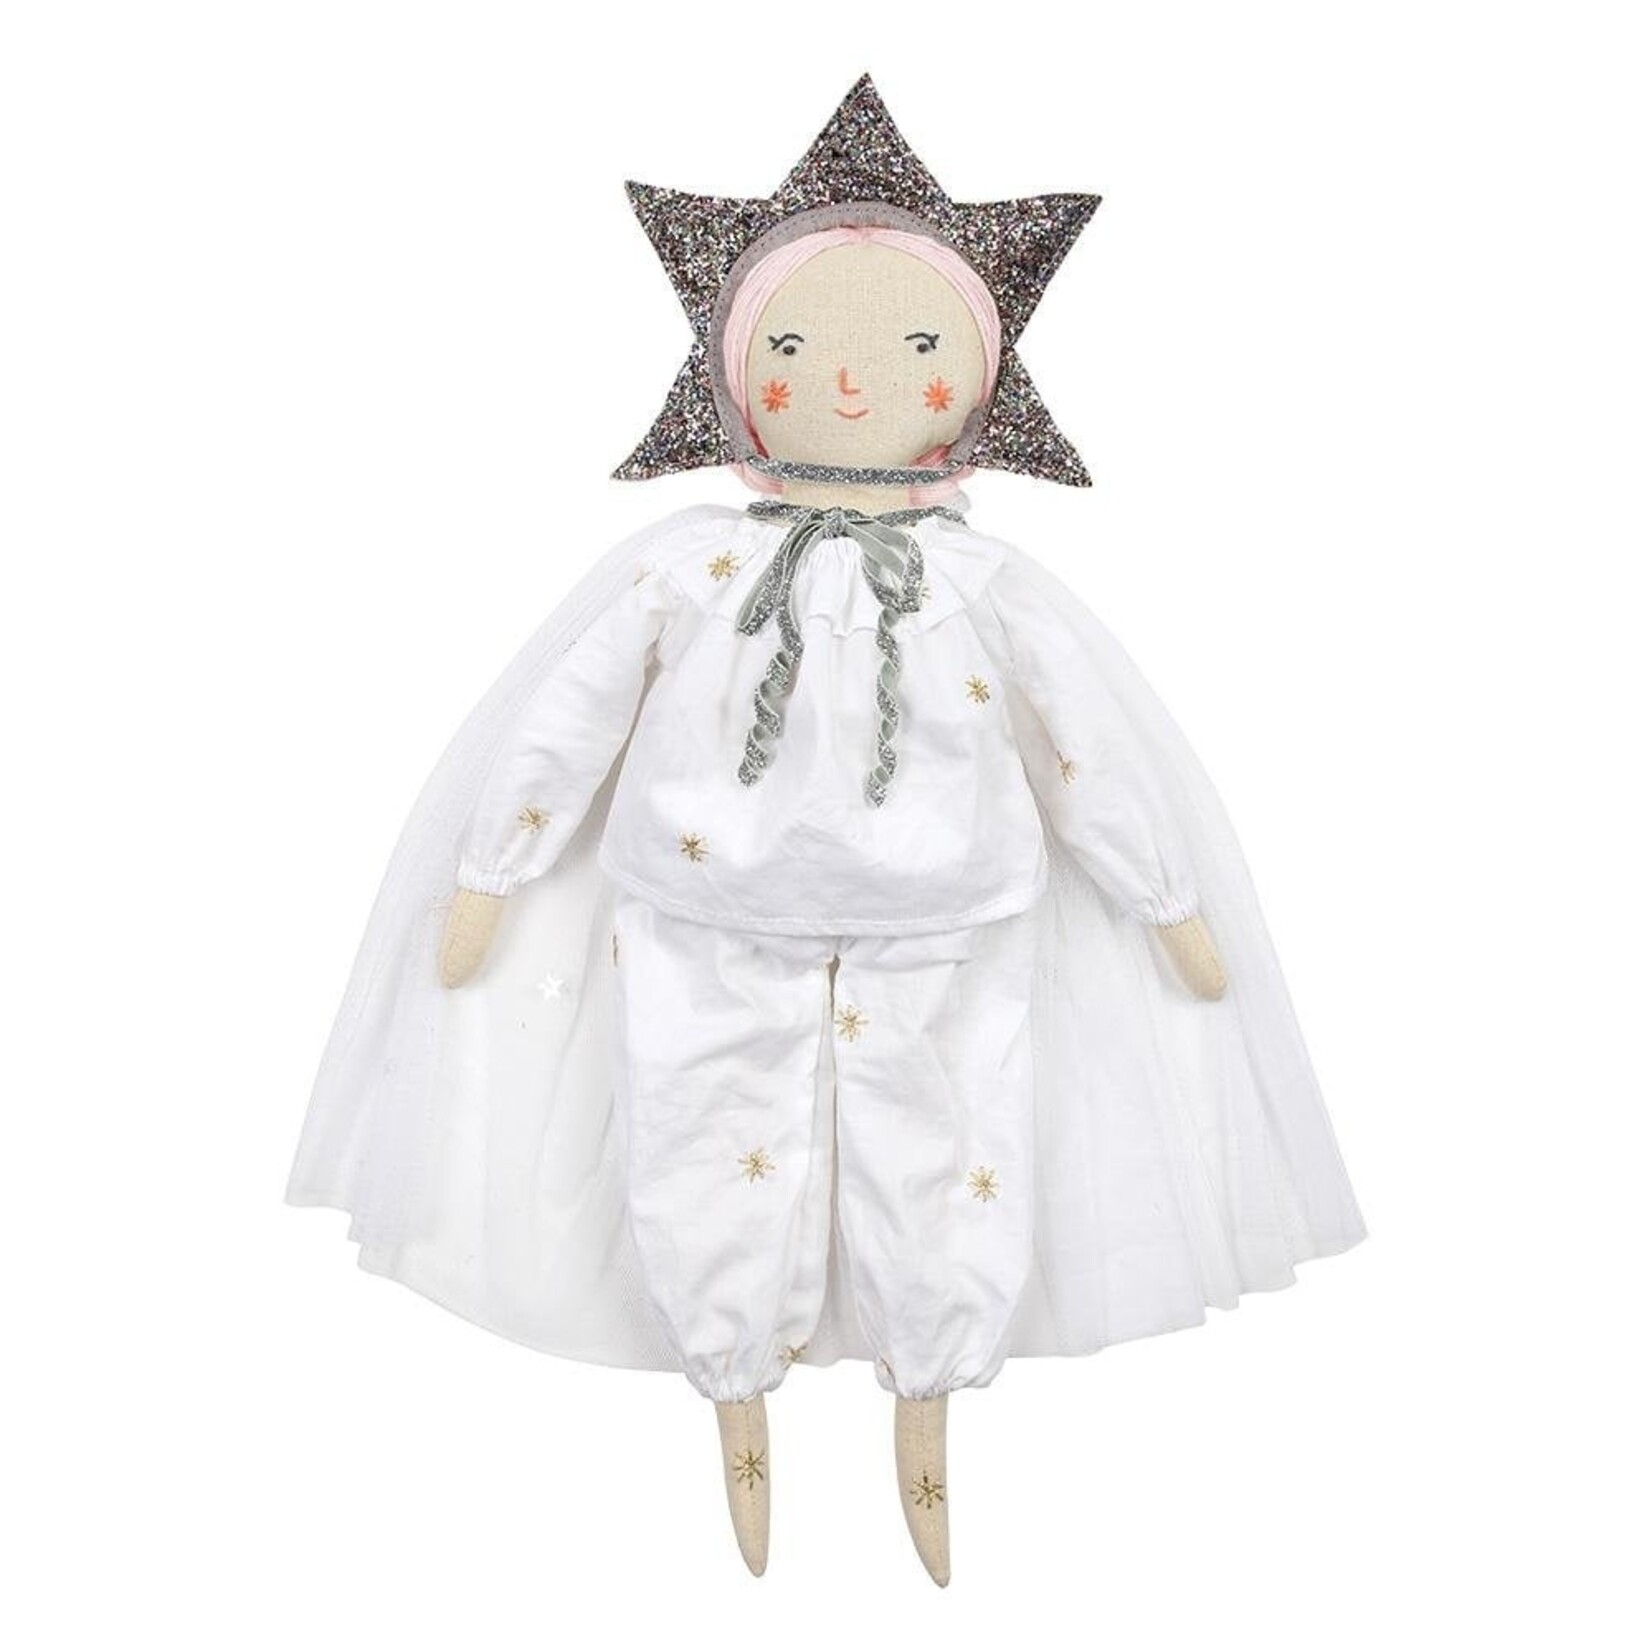 MERIMERI star headdress & cape doll dress-up kit